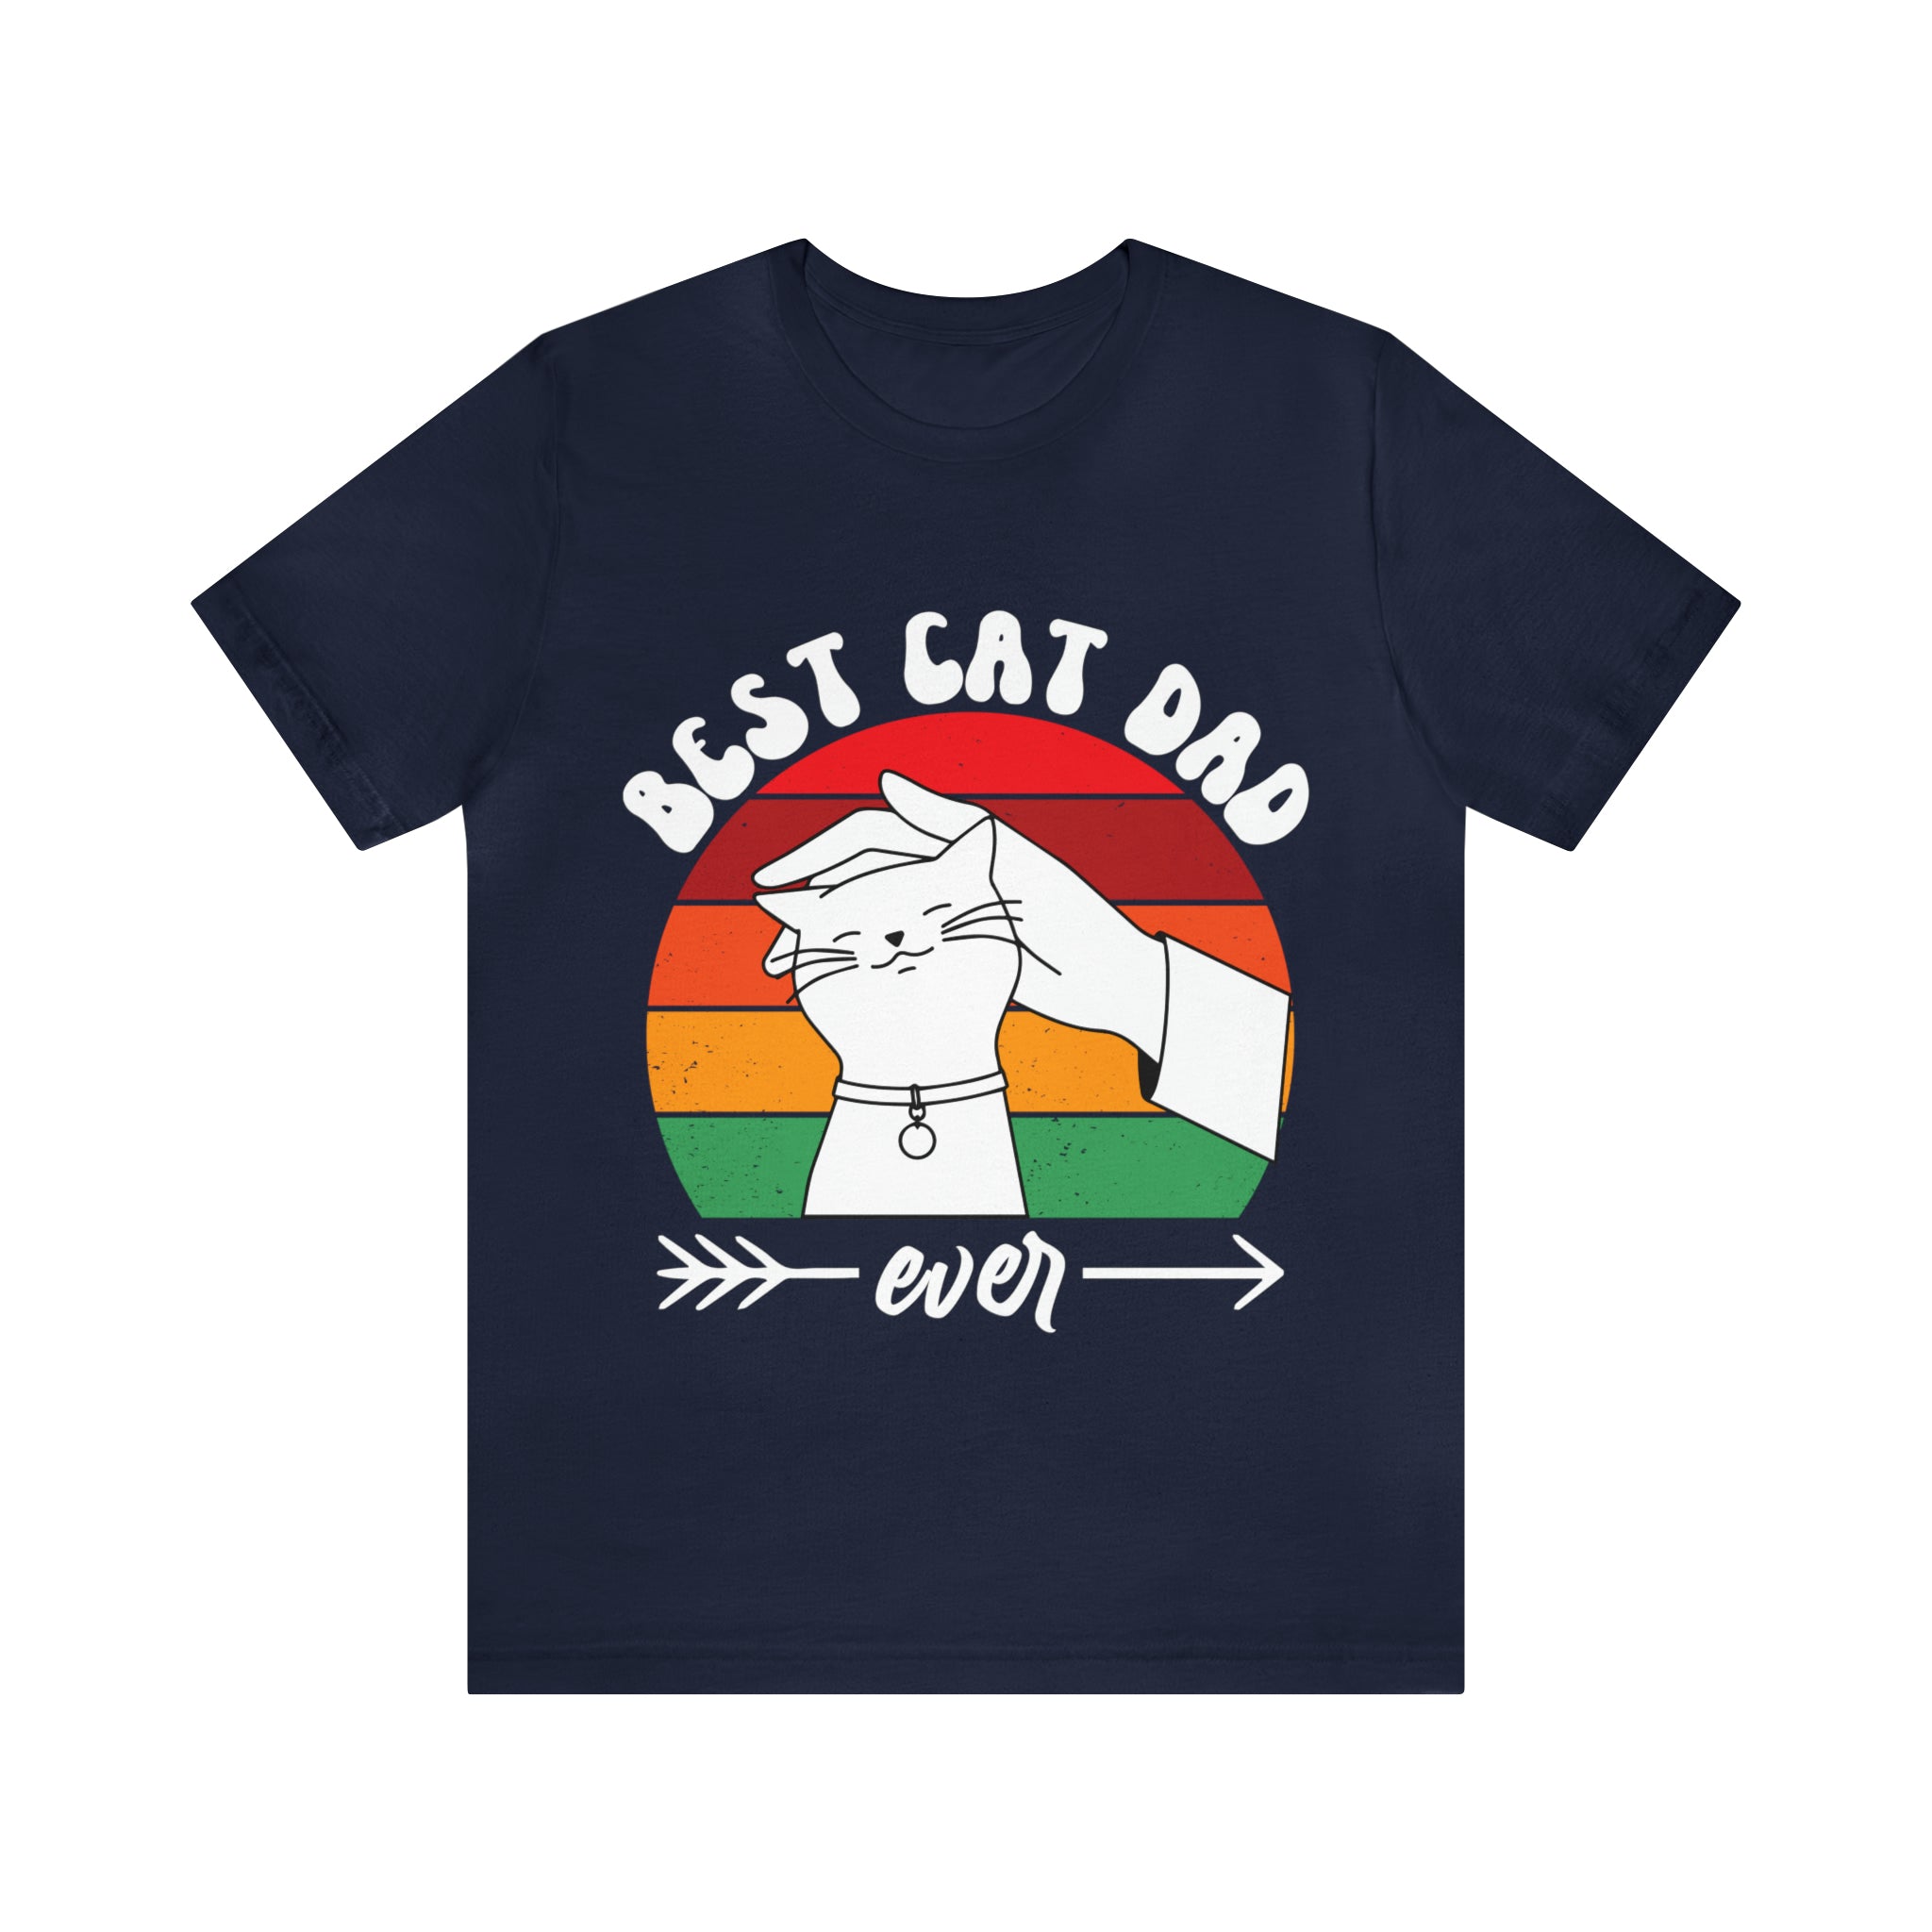 Cat dad t-shirt navy